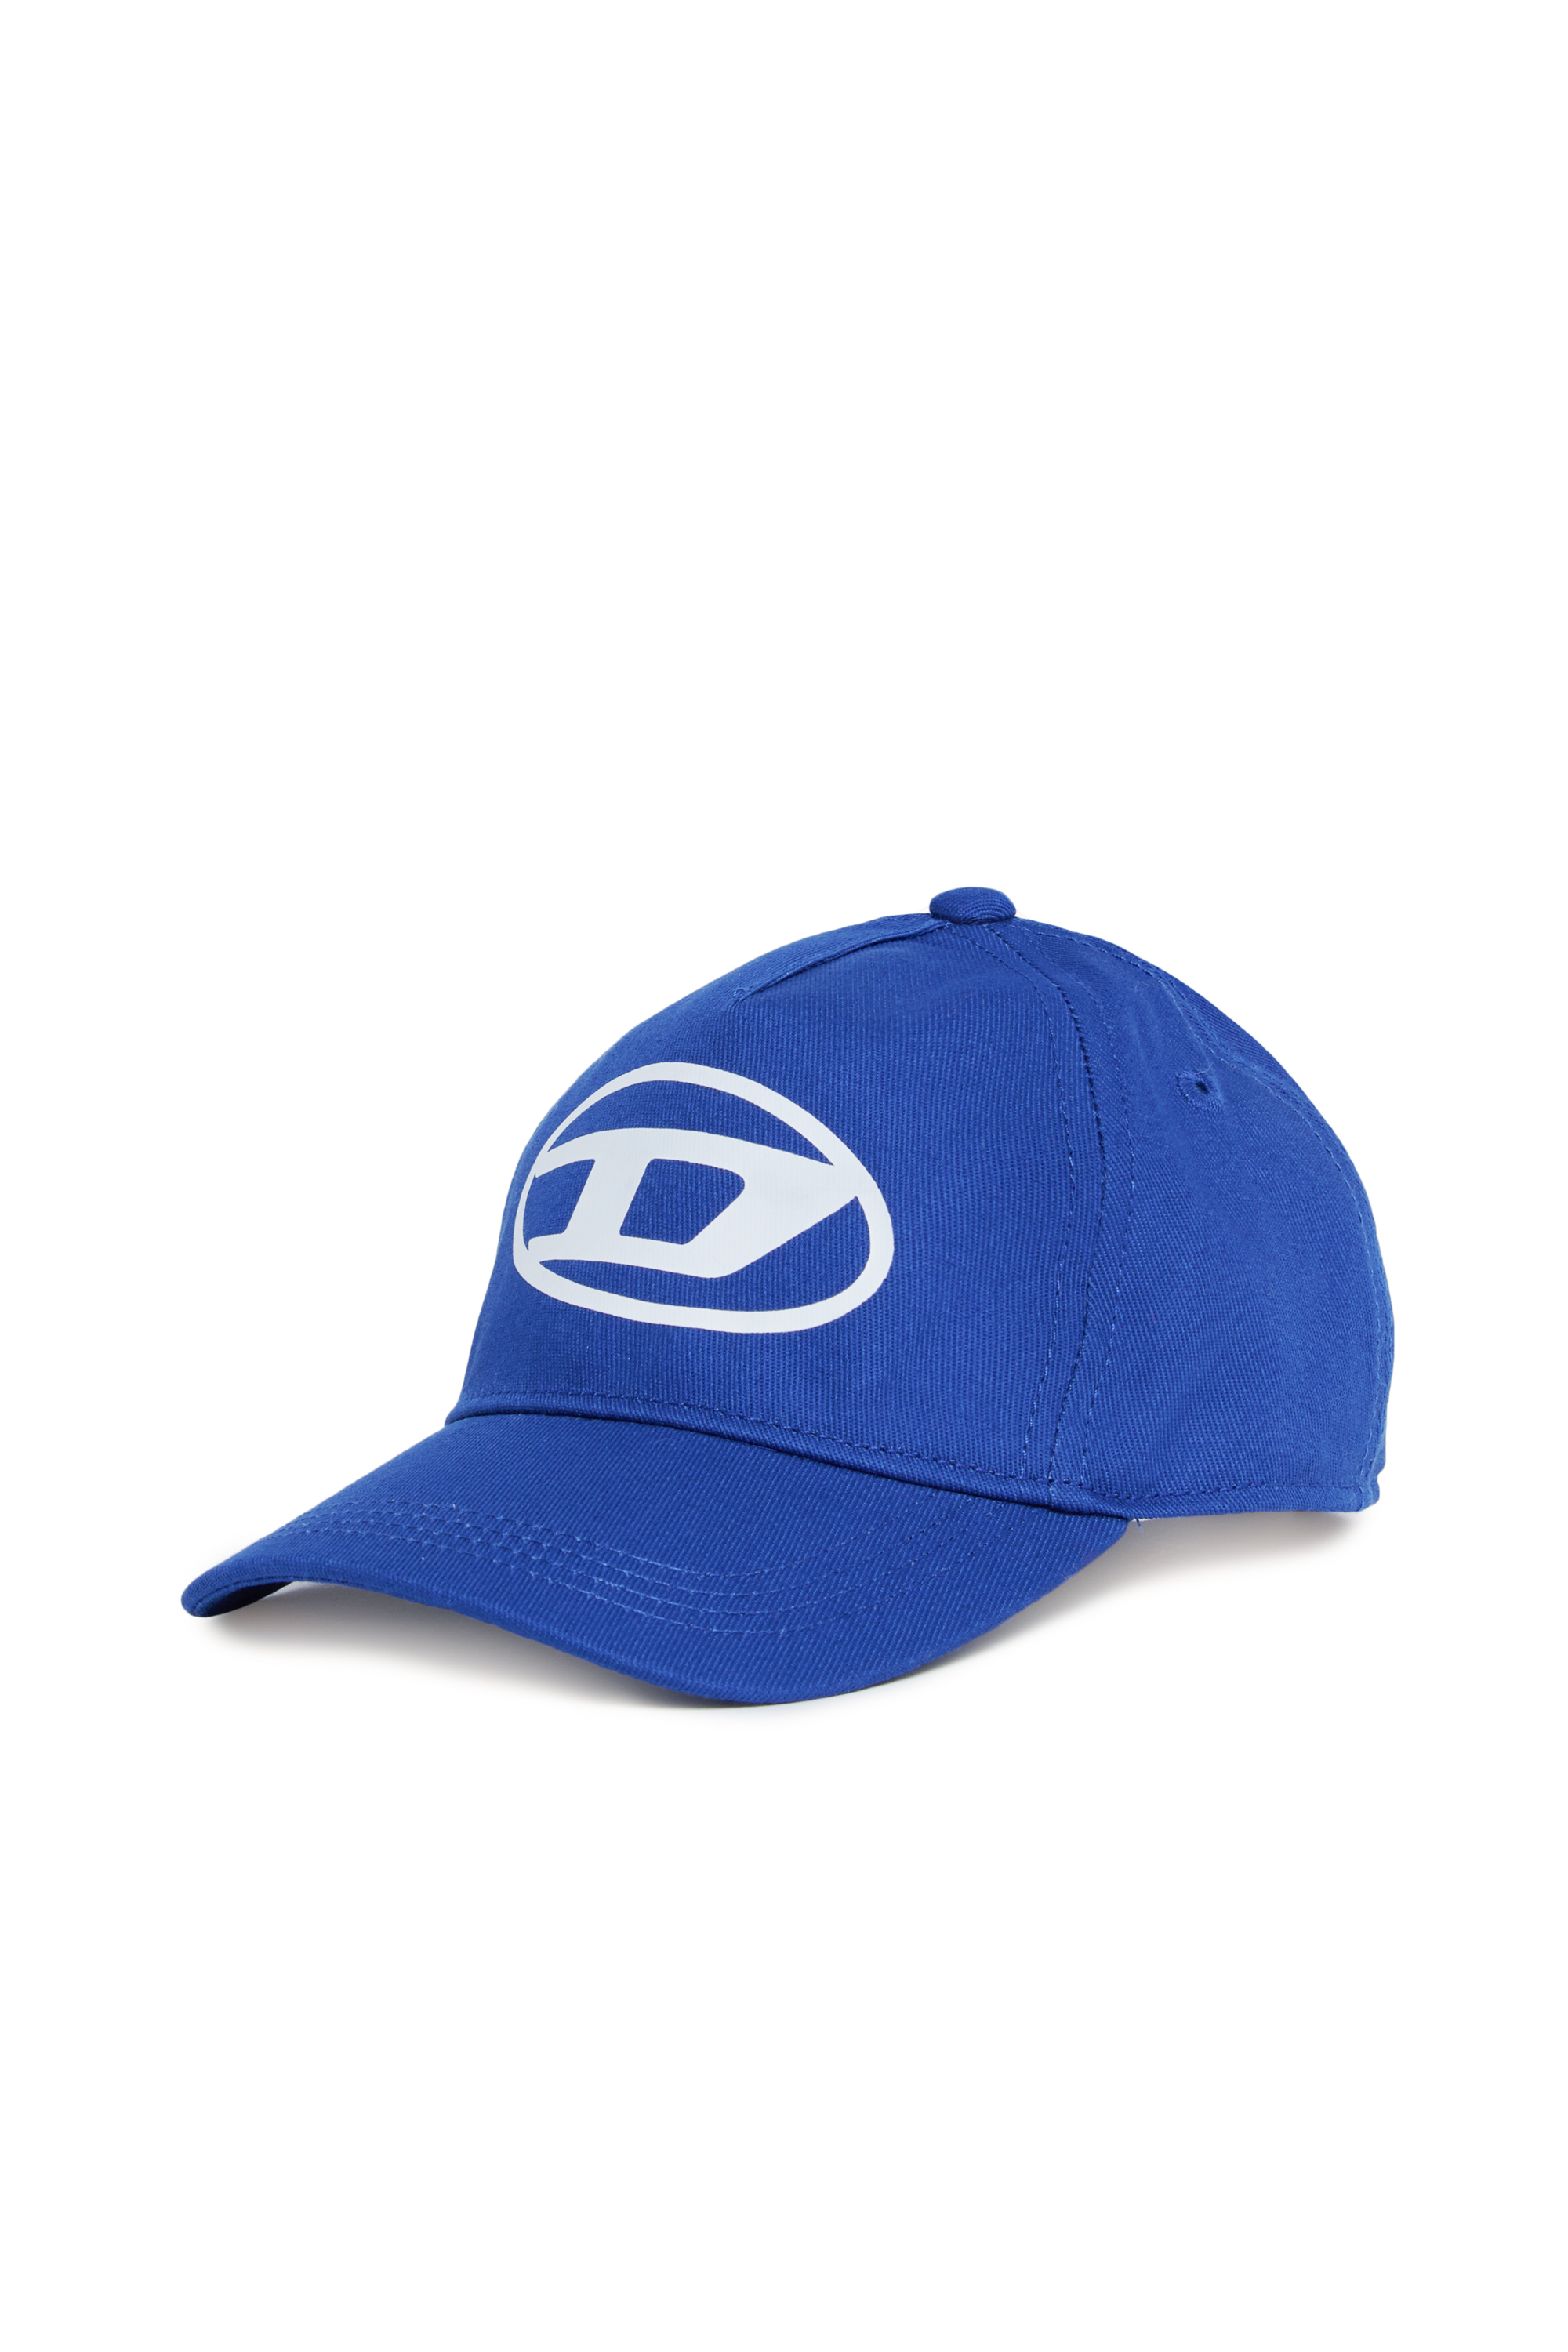 Diesel - FIMBOB, Mixte Casquette de baseball avec imprimé Oval D in Bleu - Image 1